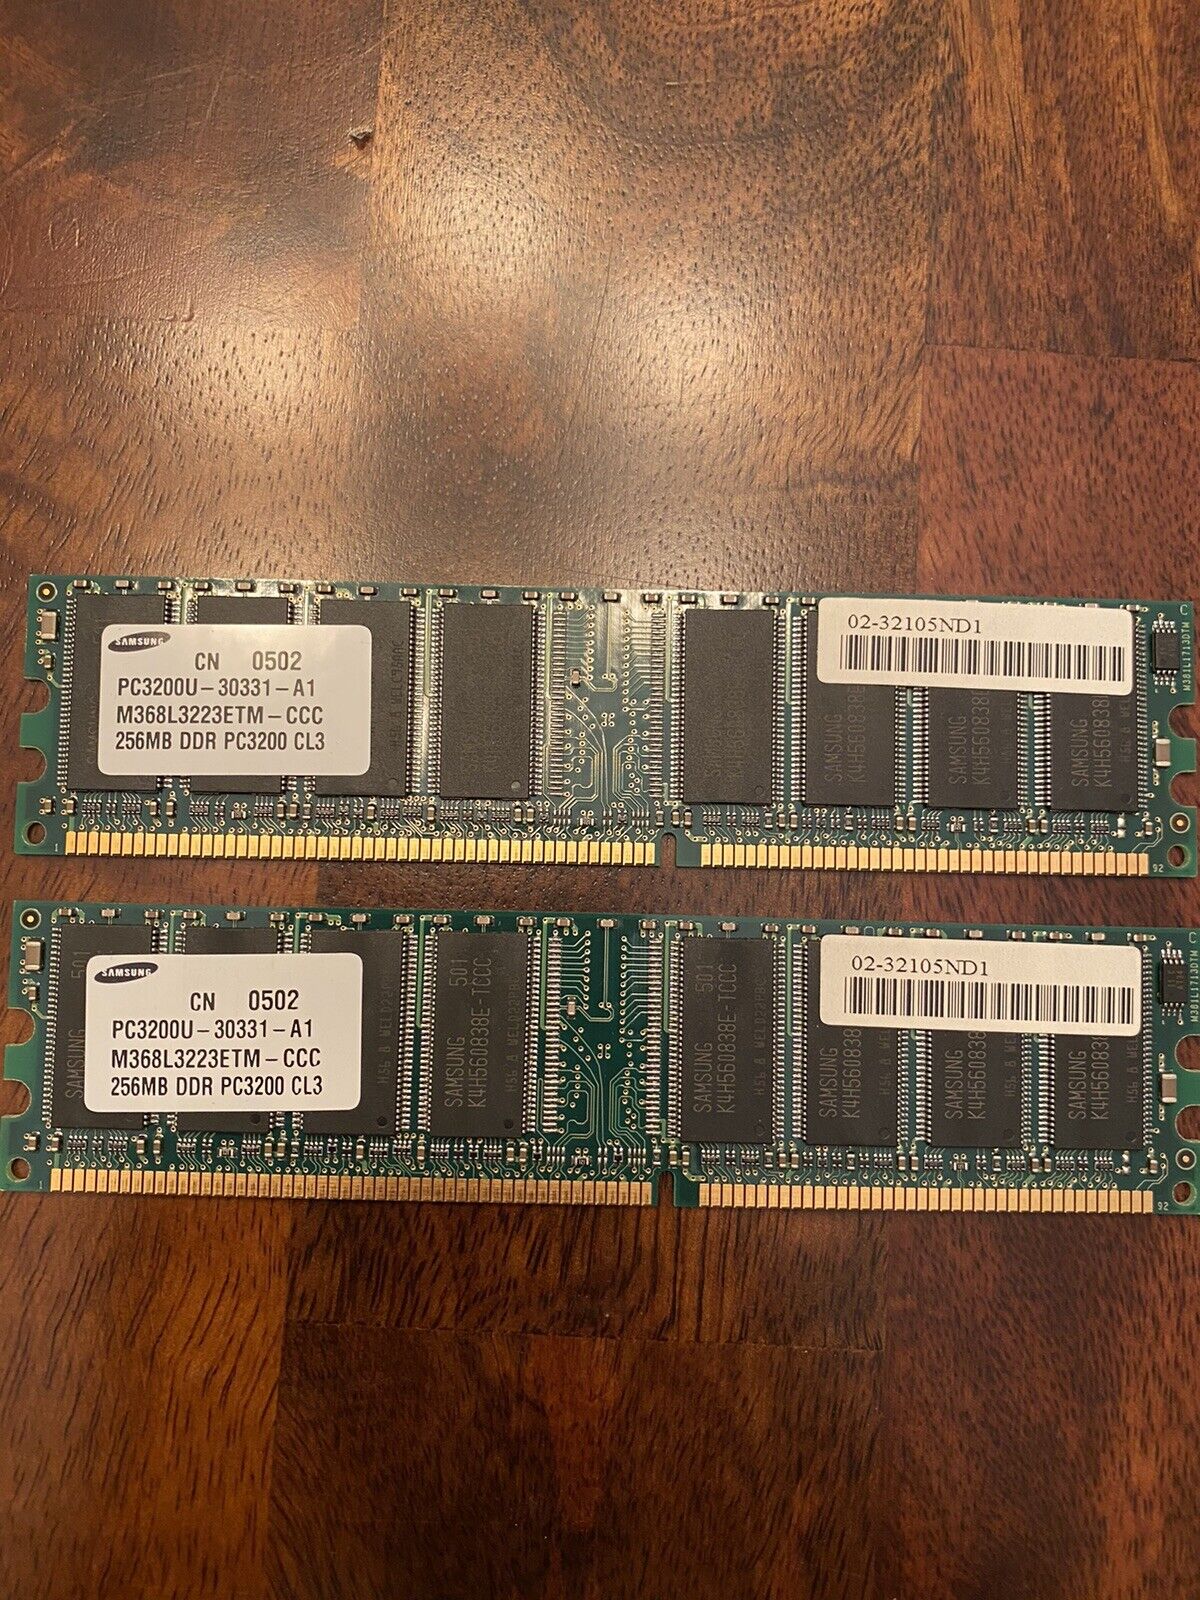 256MB PC3200 CL3 Ram Sticks (x2) Two Sticks